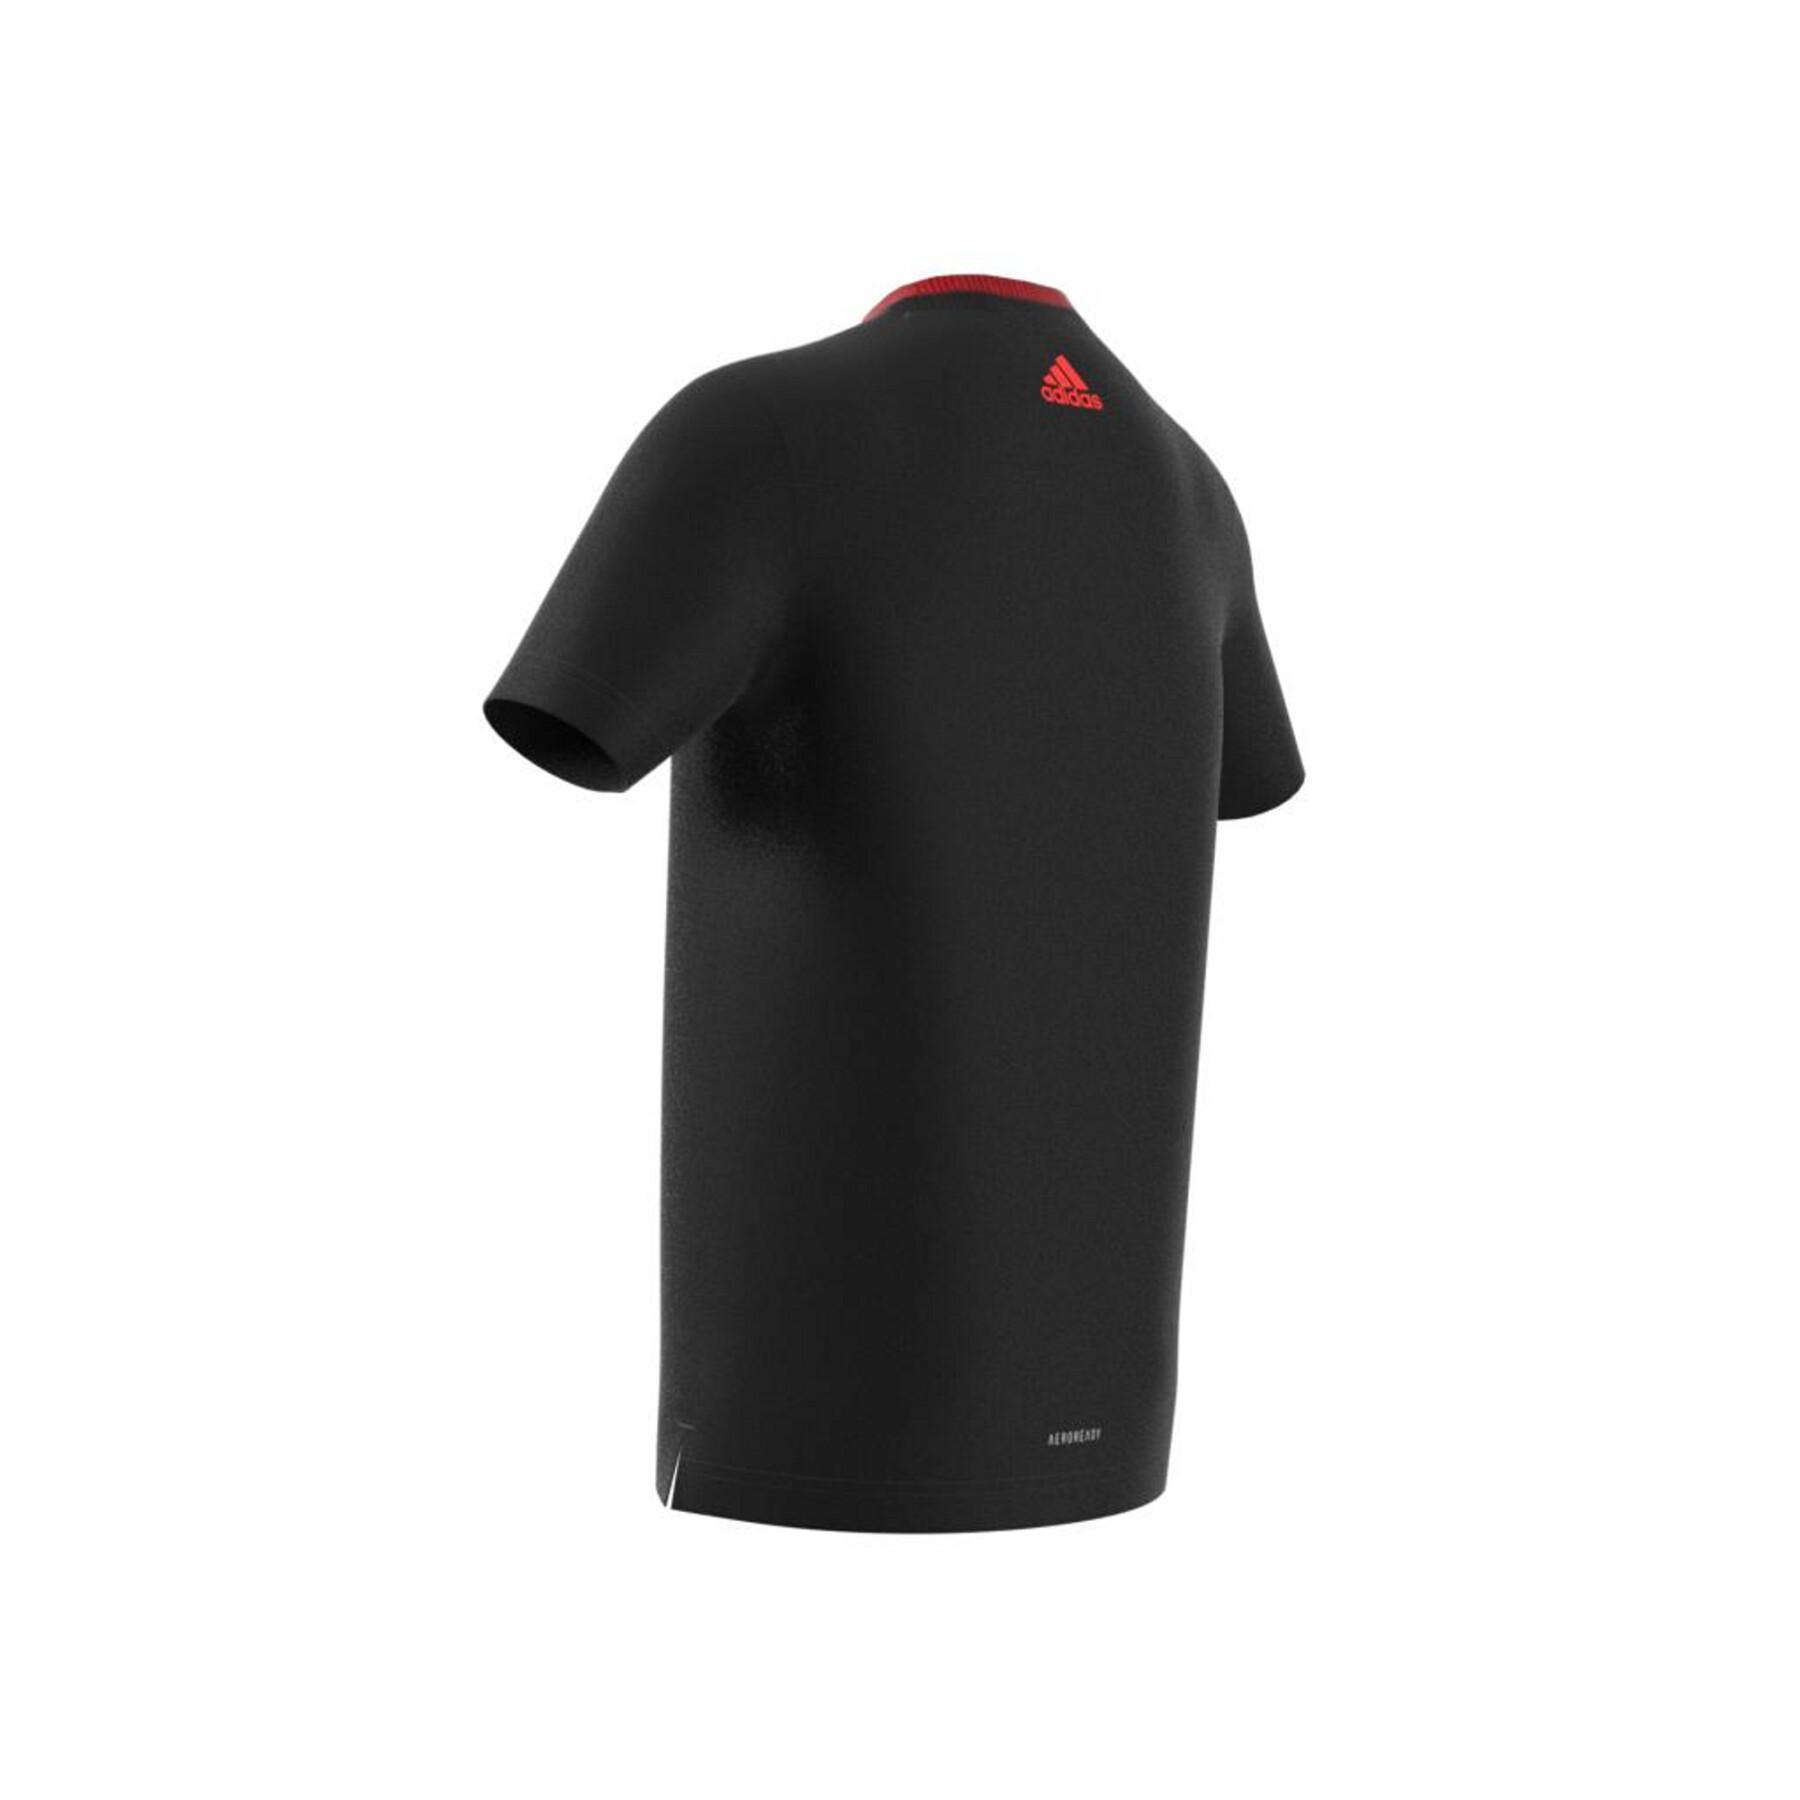 Kinder T-shirt adidas AEROREADY X Football-Inspired